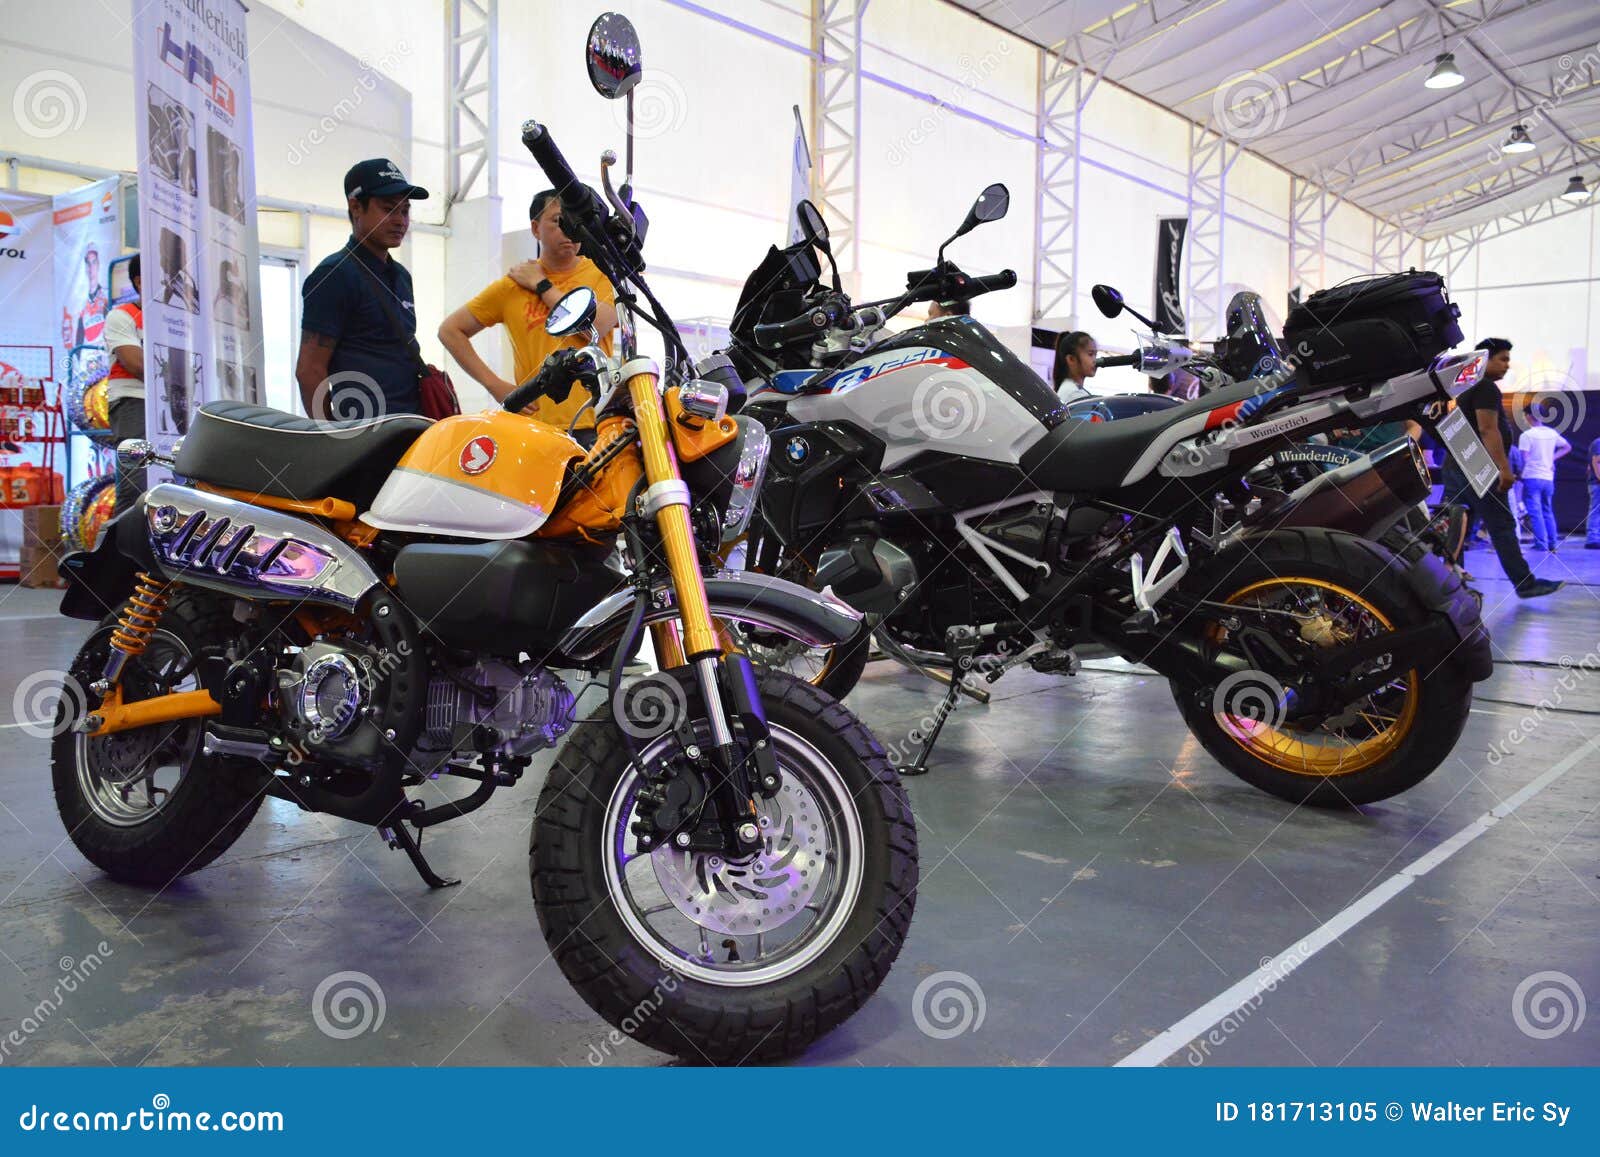 Honda Monkey Motorcycle At Ride Ph Motorcycle Show In Pasig Philippines Editorial Image Image Of Design Honda